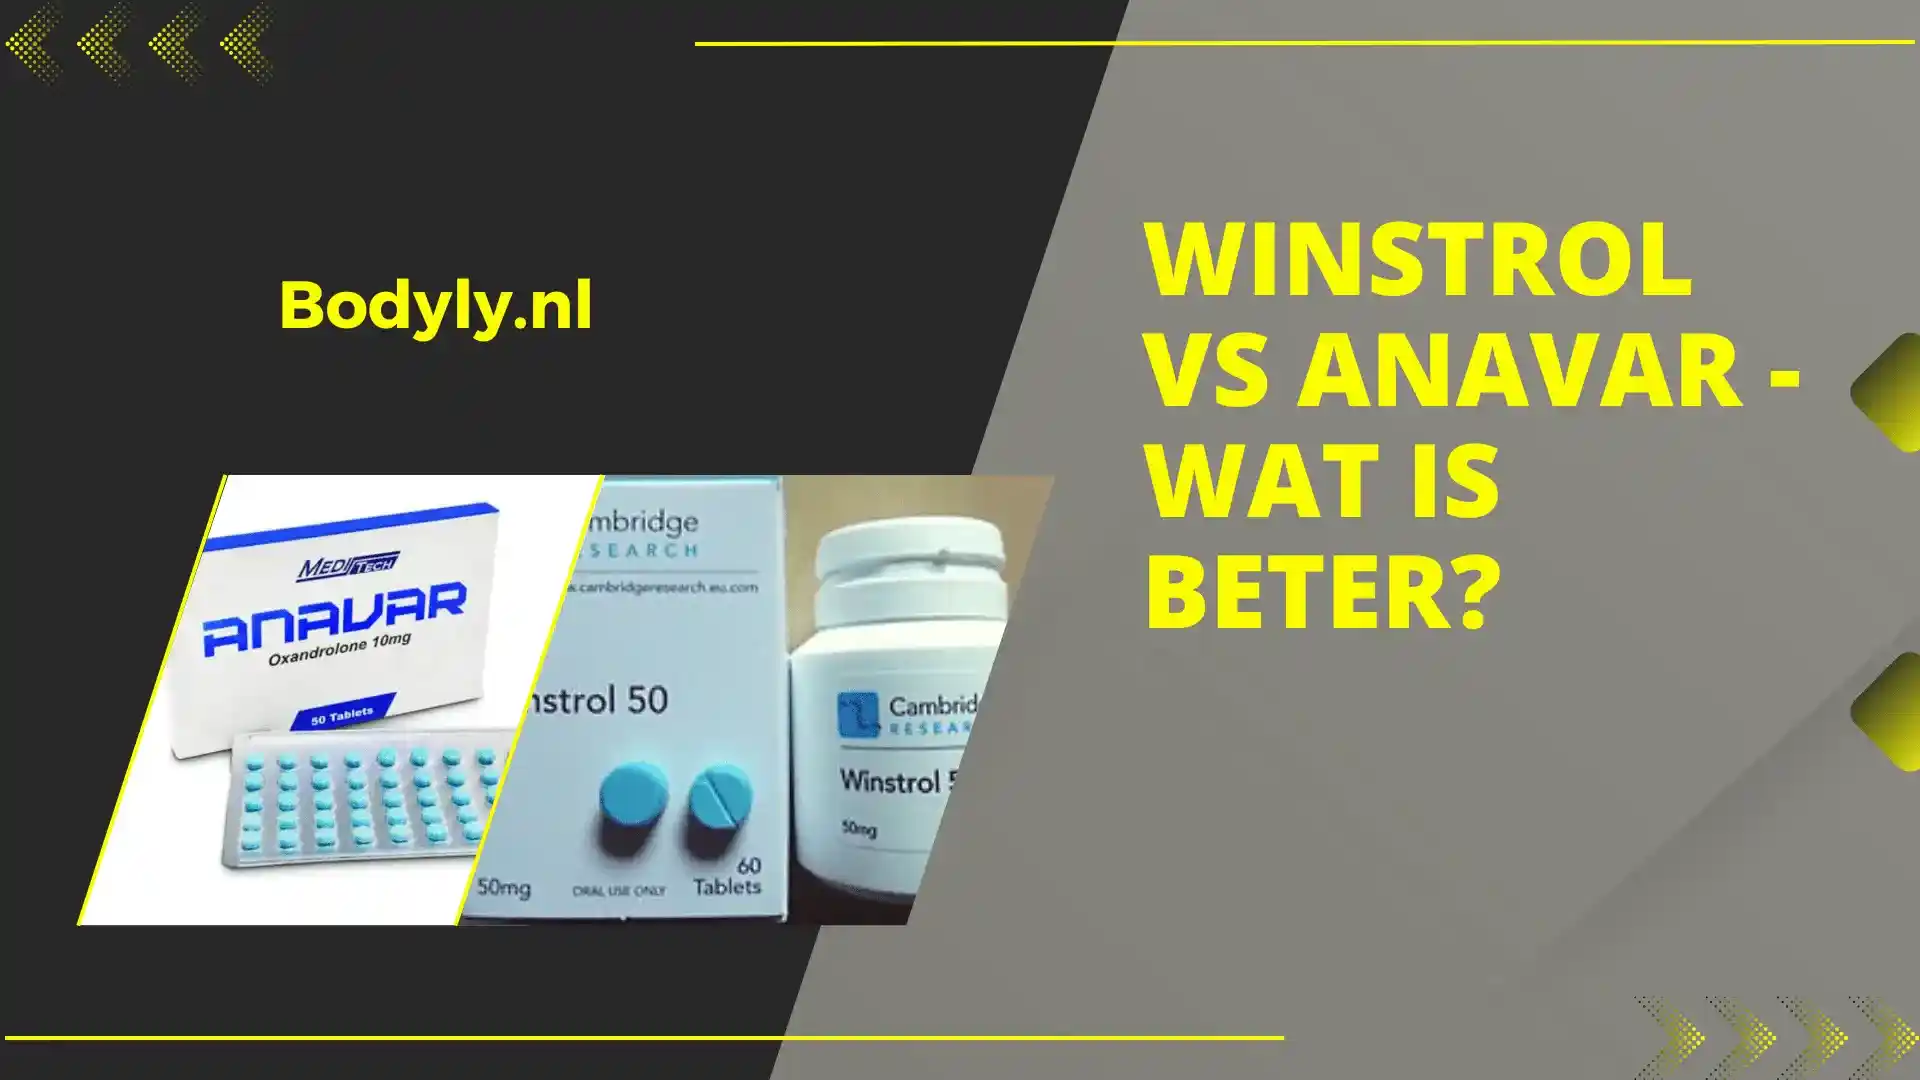 Winstrol vs Anavar